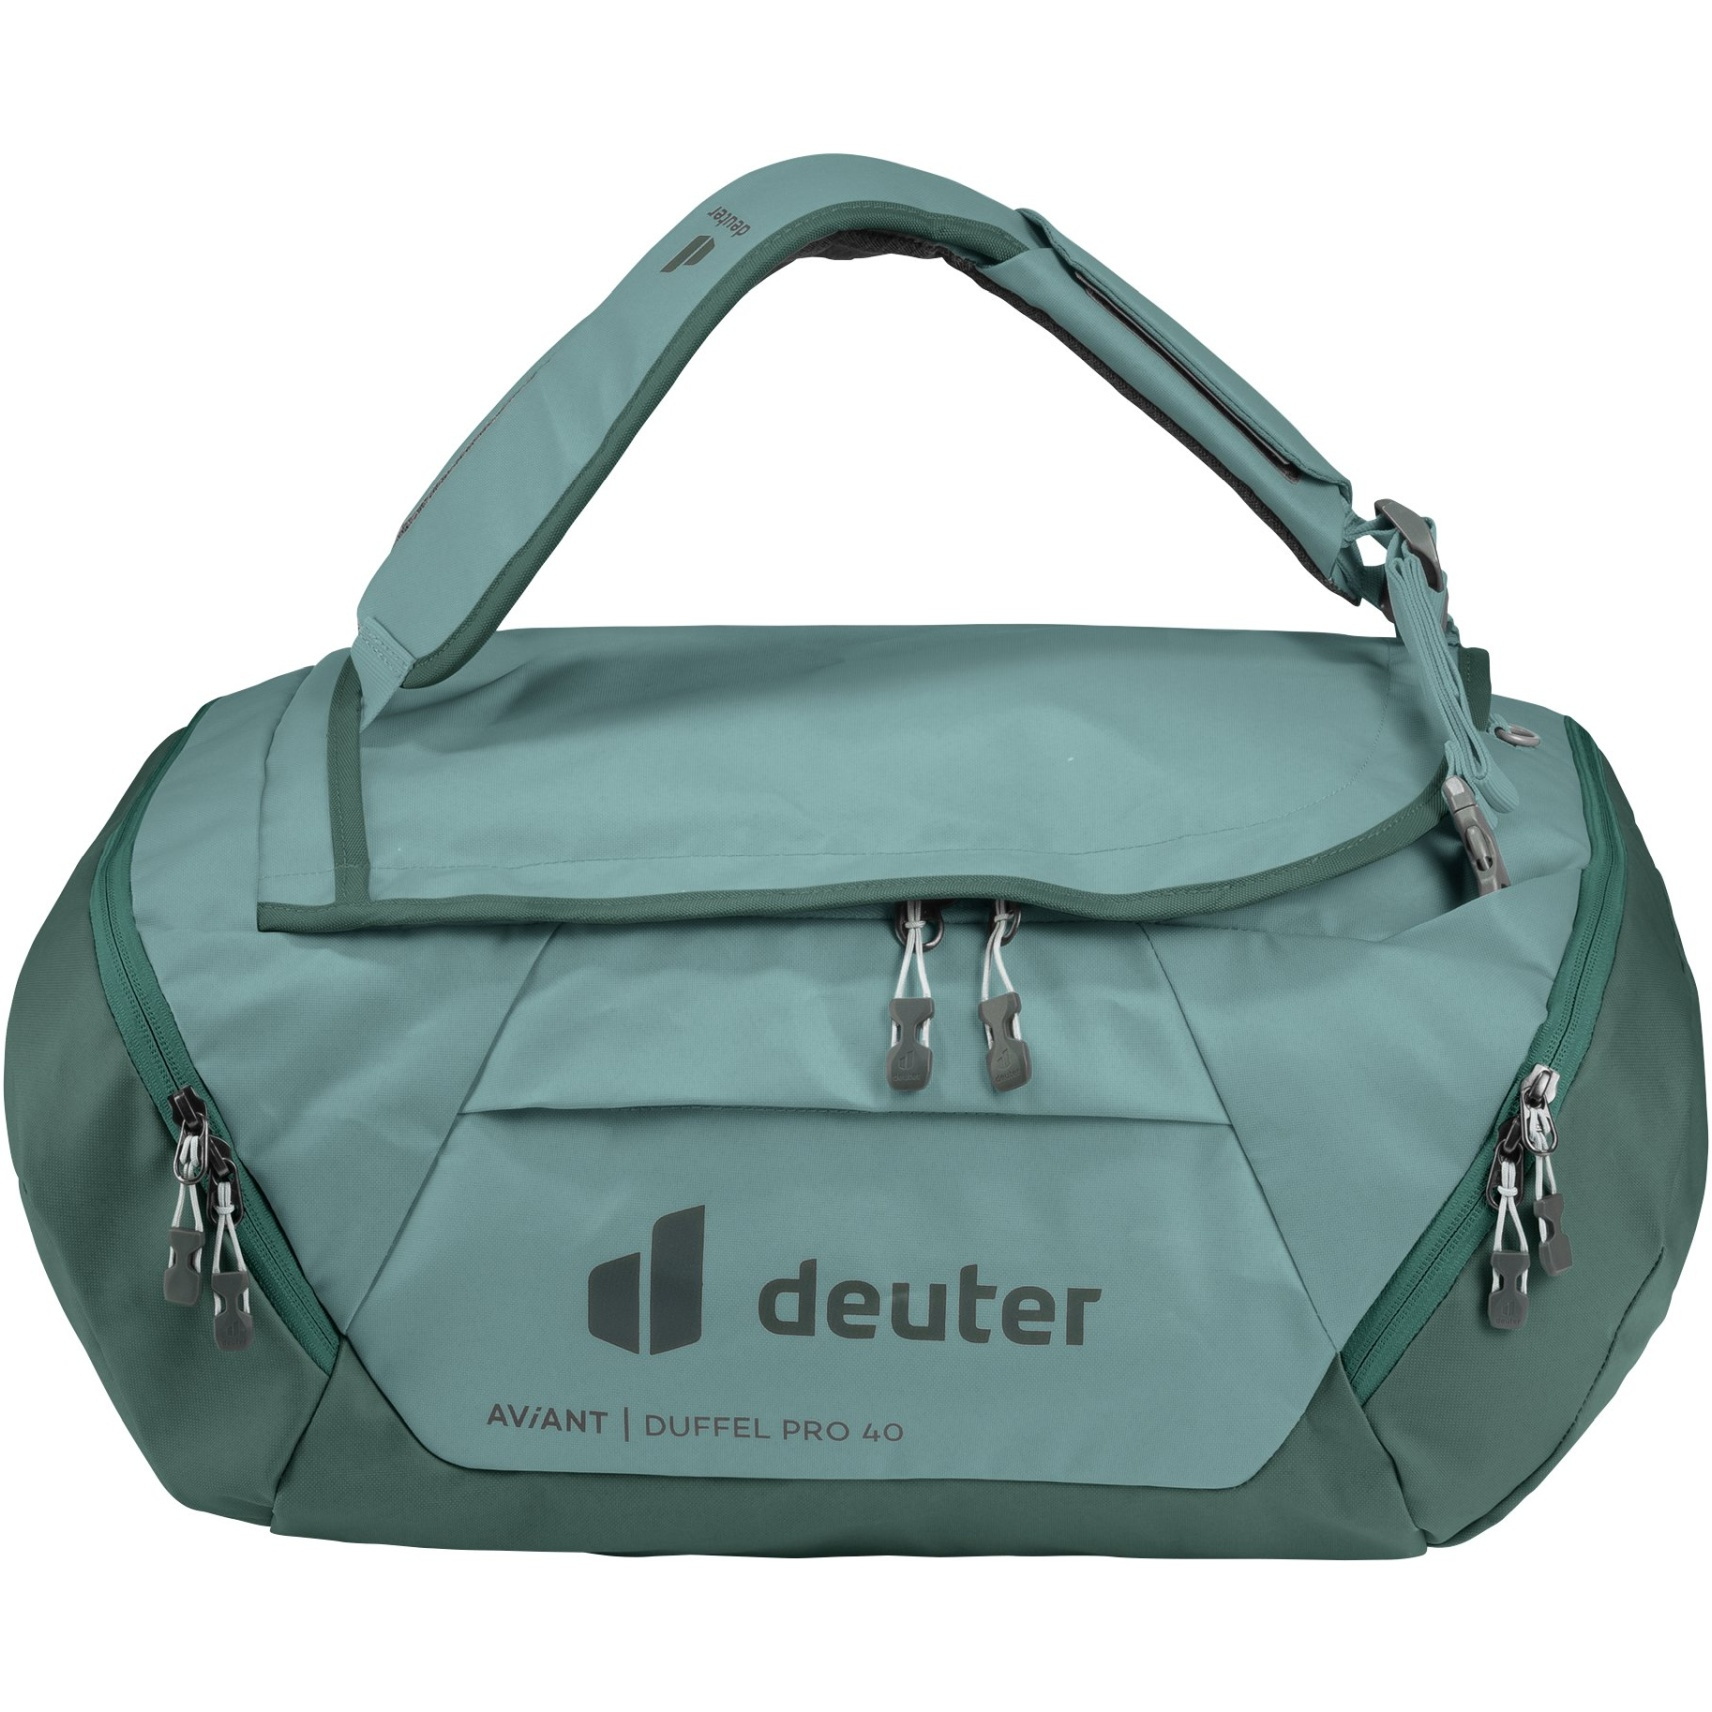 Deuter AViANT Duffel Pro 40 Reisetasche - jade-seagreen | BIKE24 | Reisetaschen